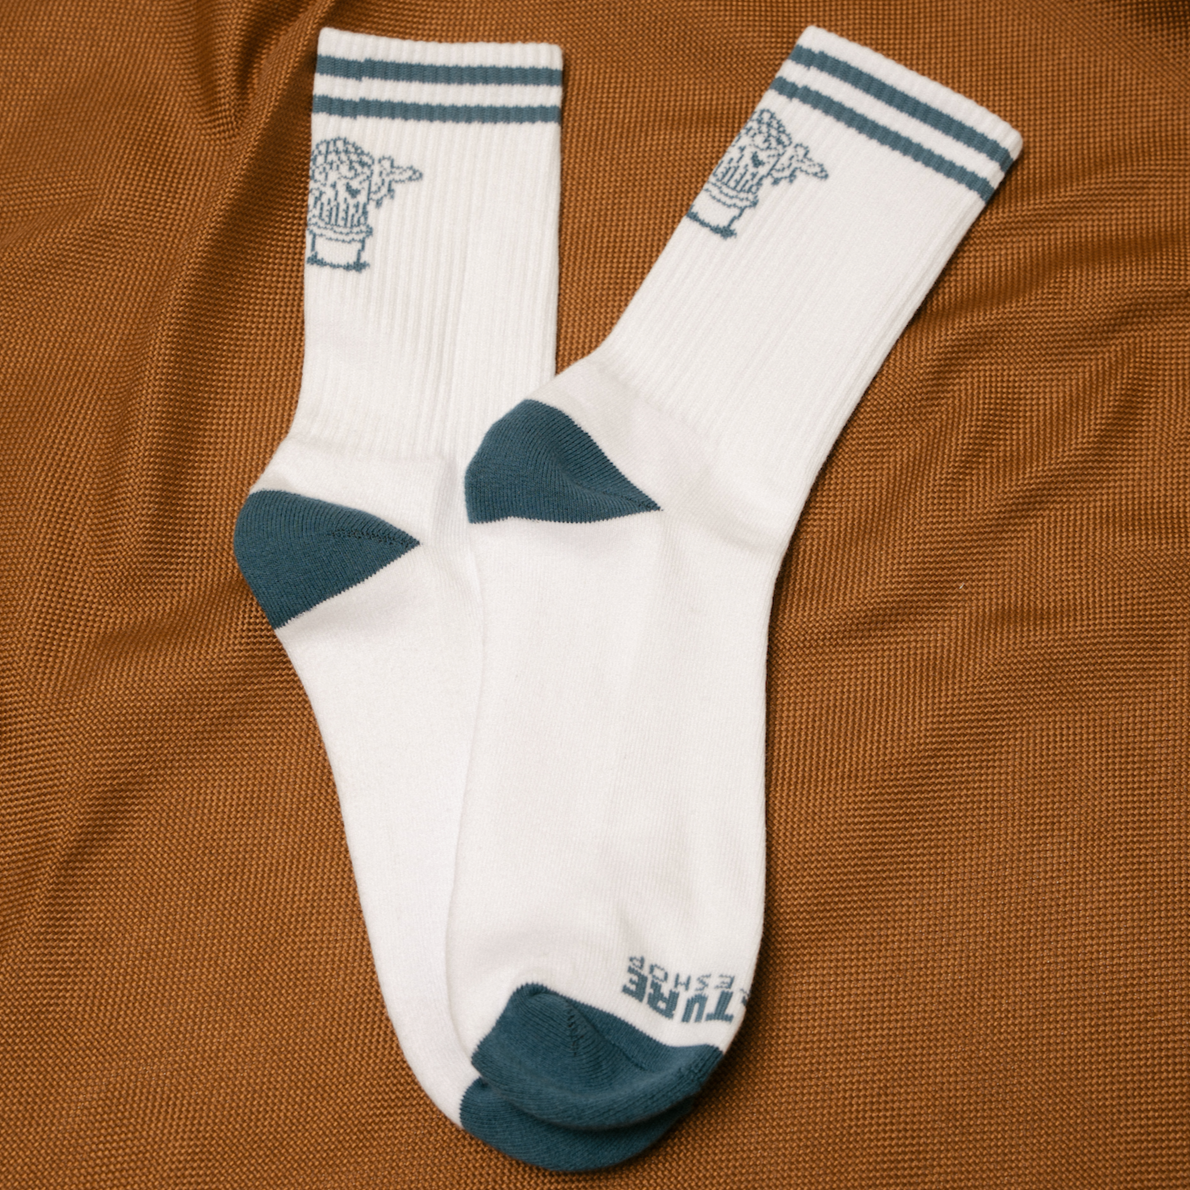 Witly - Custom Athletic Sock